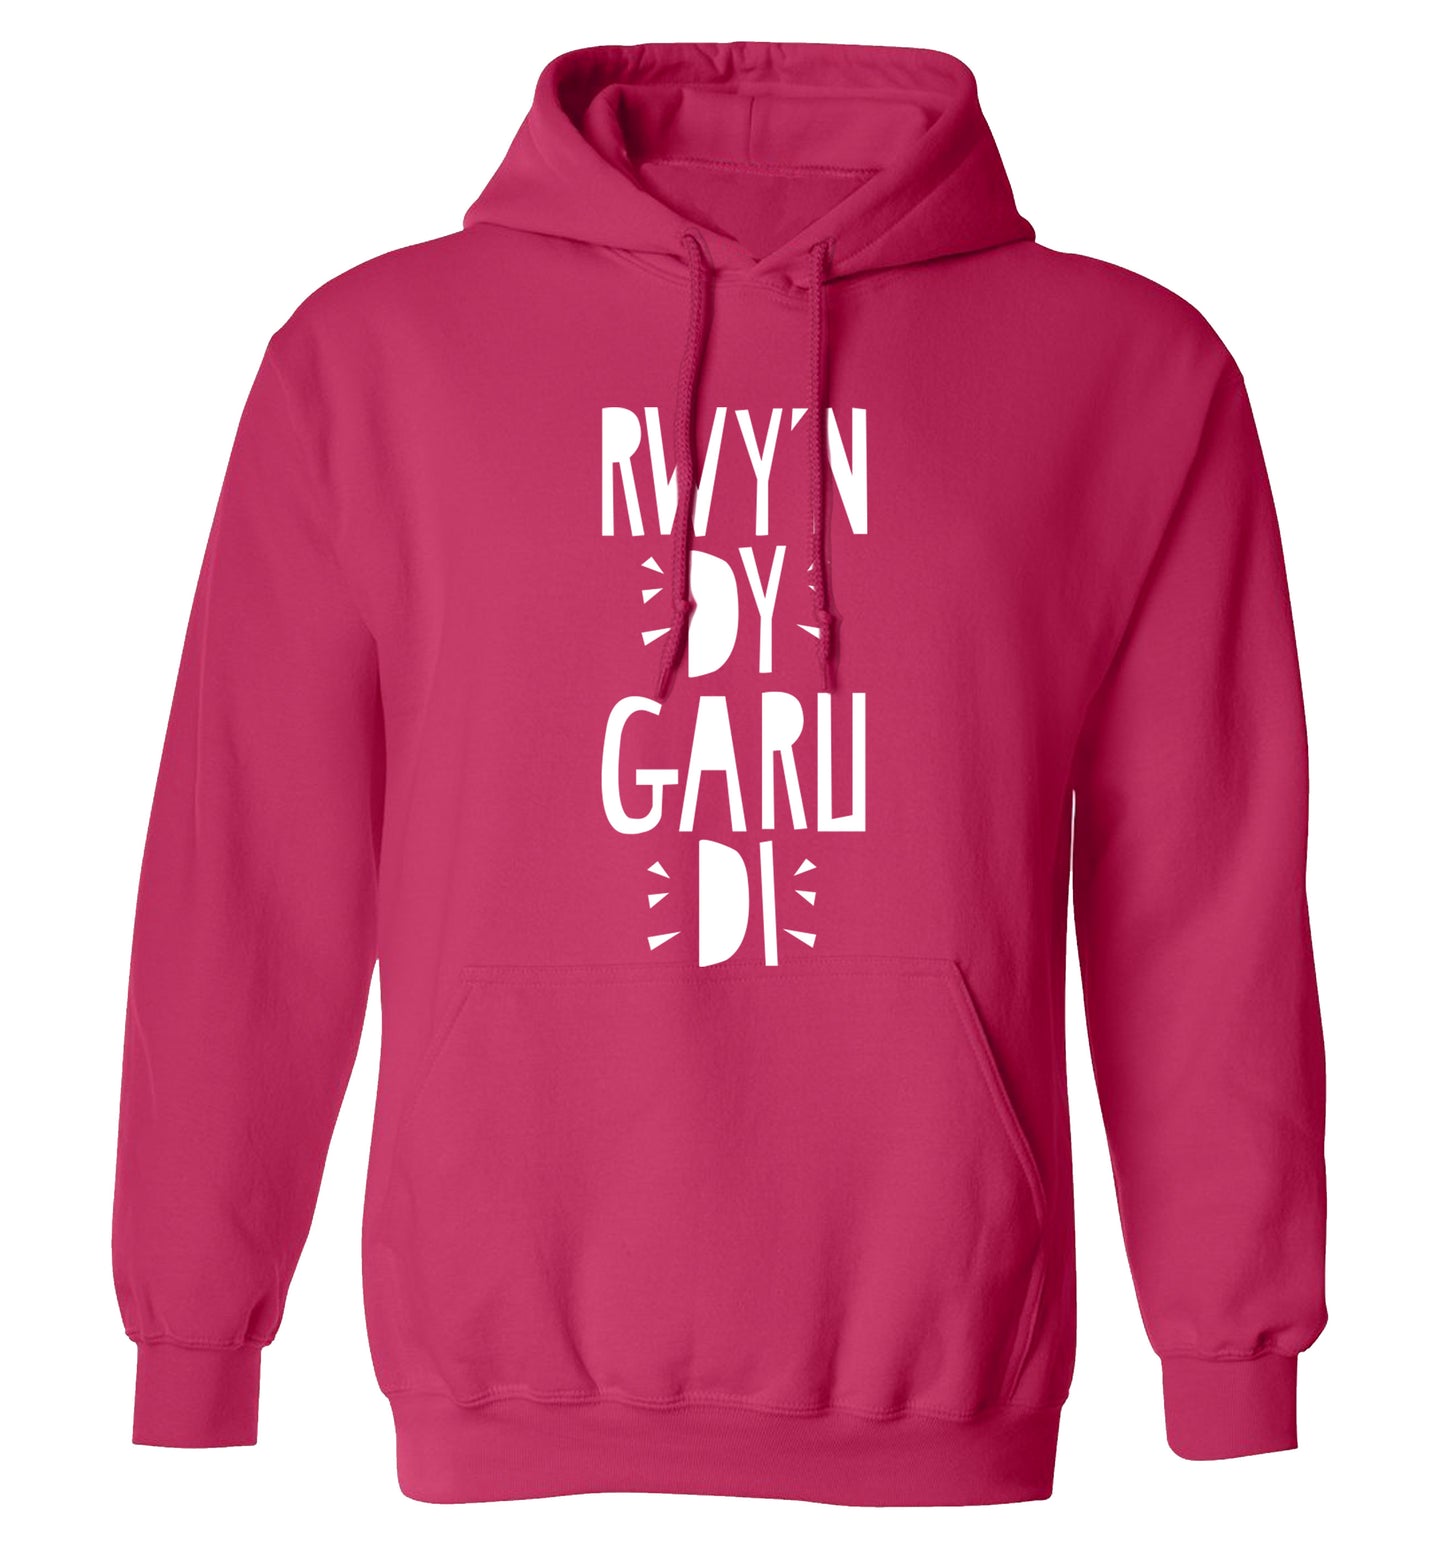 Rwy'n dy garu di - I love you adults unisex pink hoodie 2XL